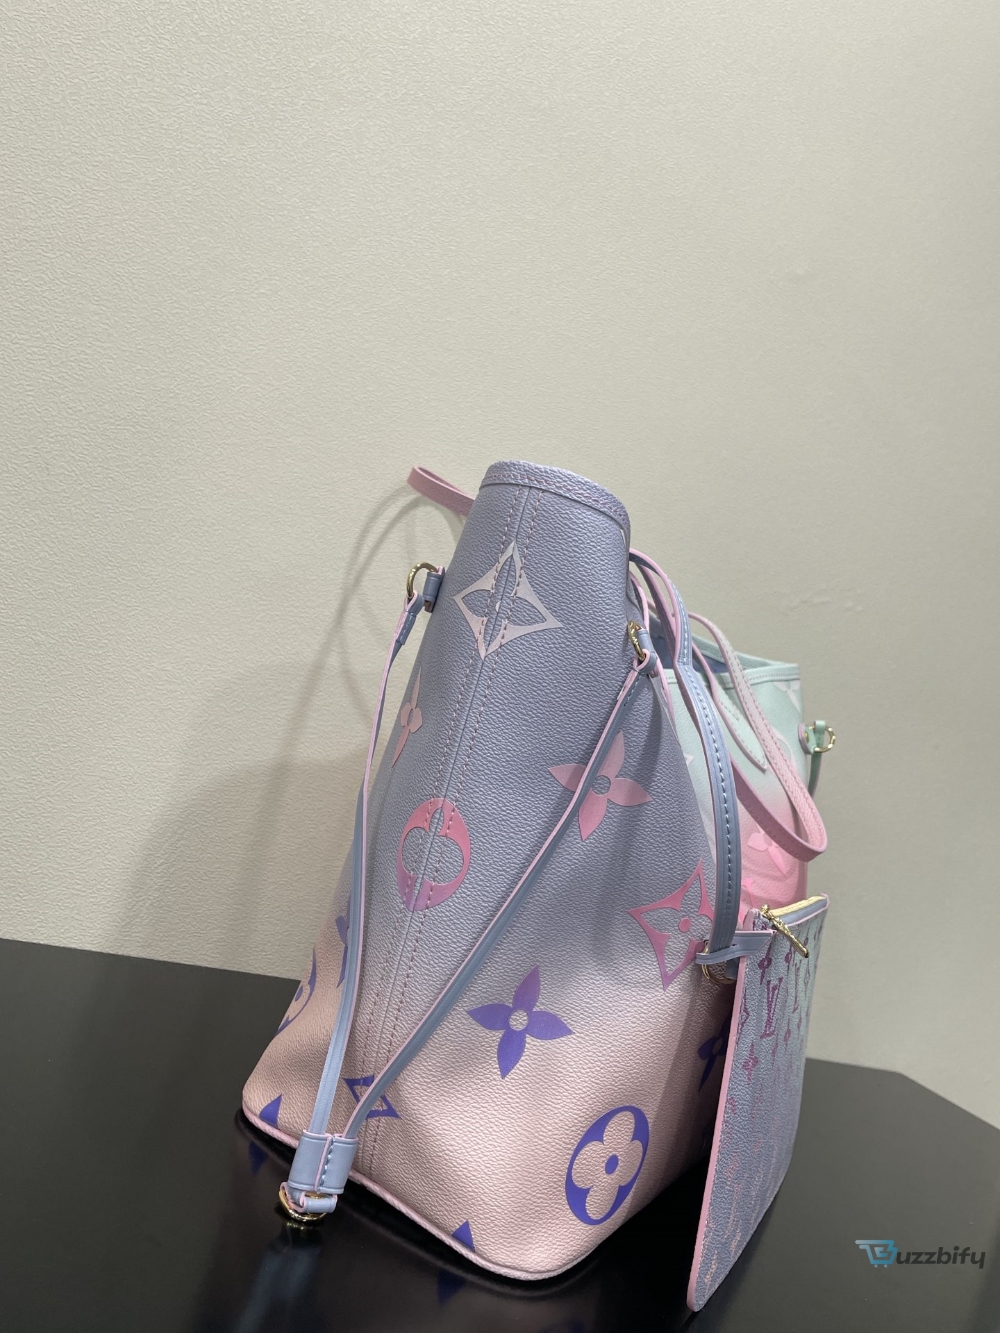 louis vuitton neverfull mm tote bag monogram canvas sunrise pastel for women womens handbags shoulder bags 122in31cm lv m46077 2799 buzzbify 1 18